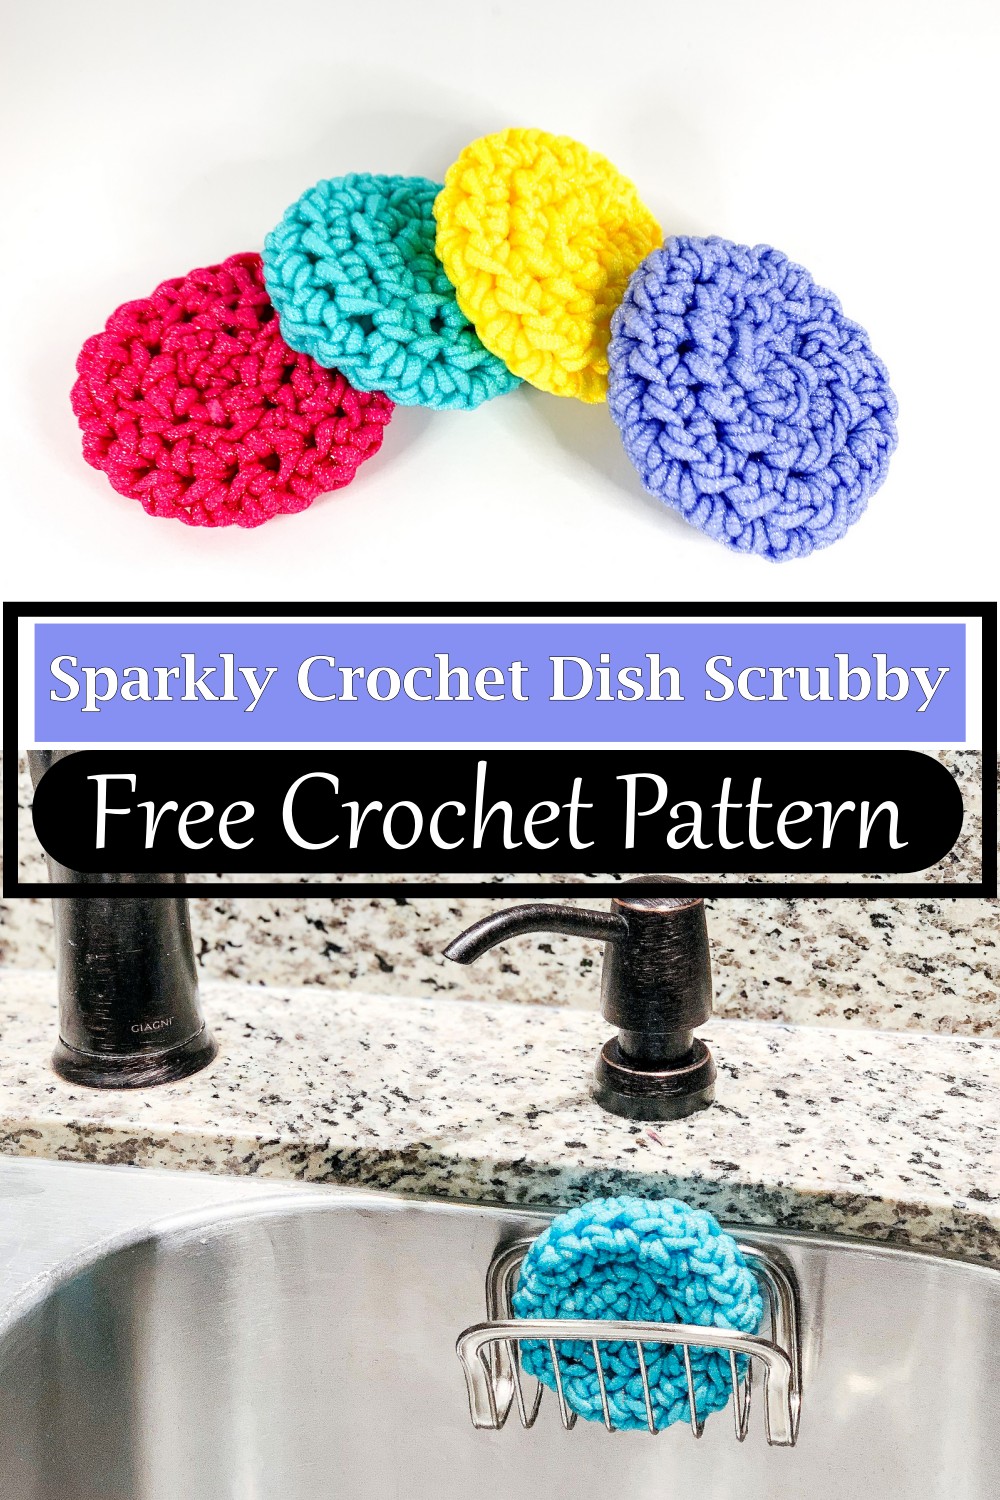 Sparkly Crochet Dish Scrubby